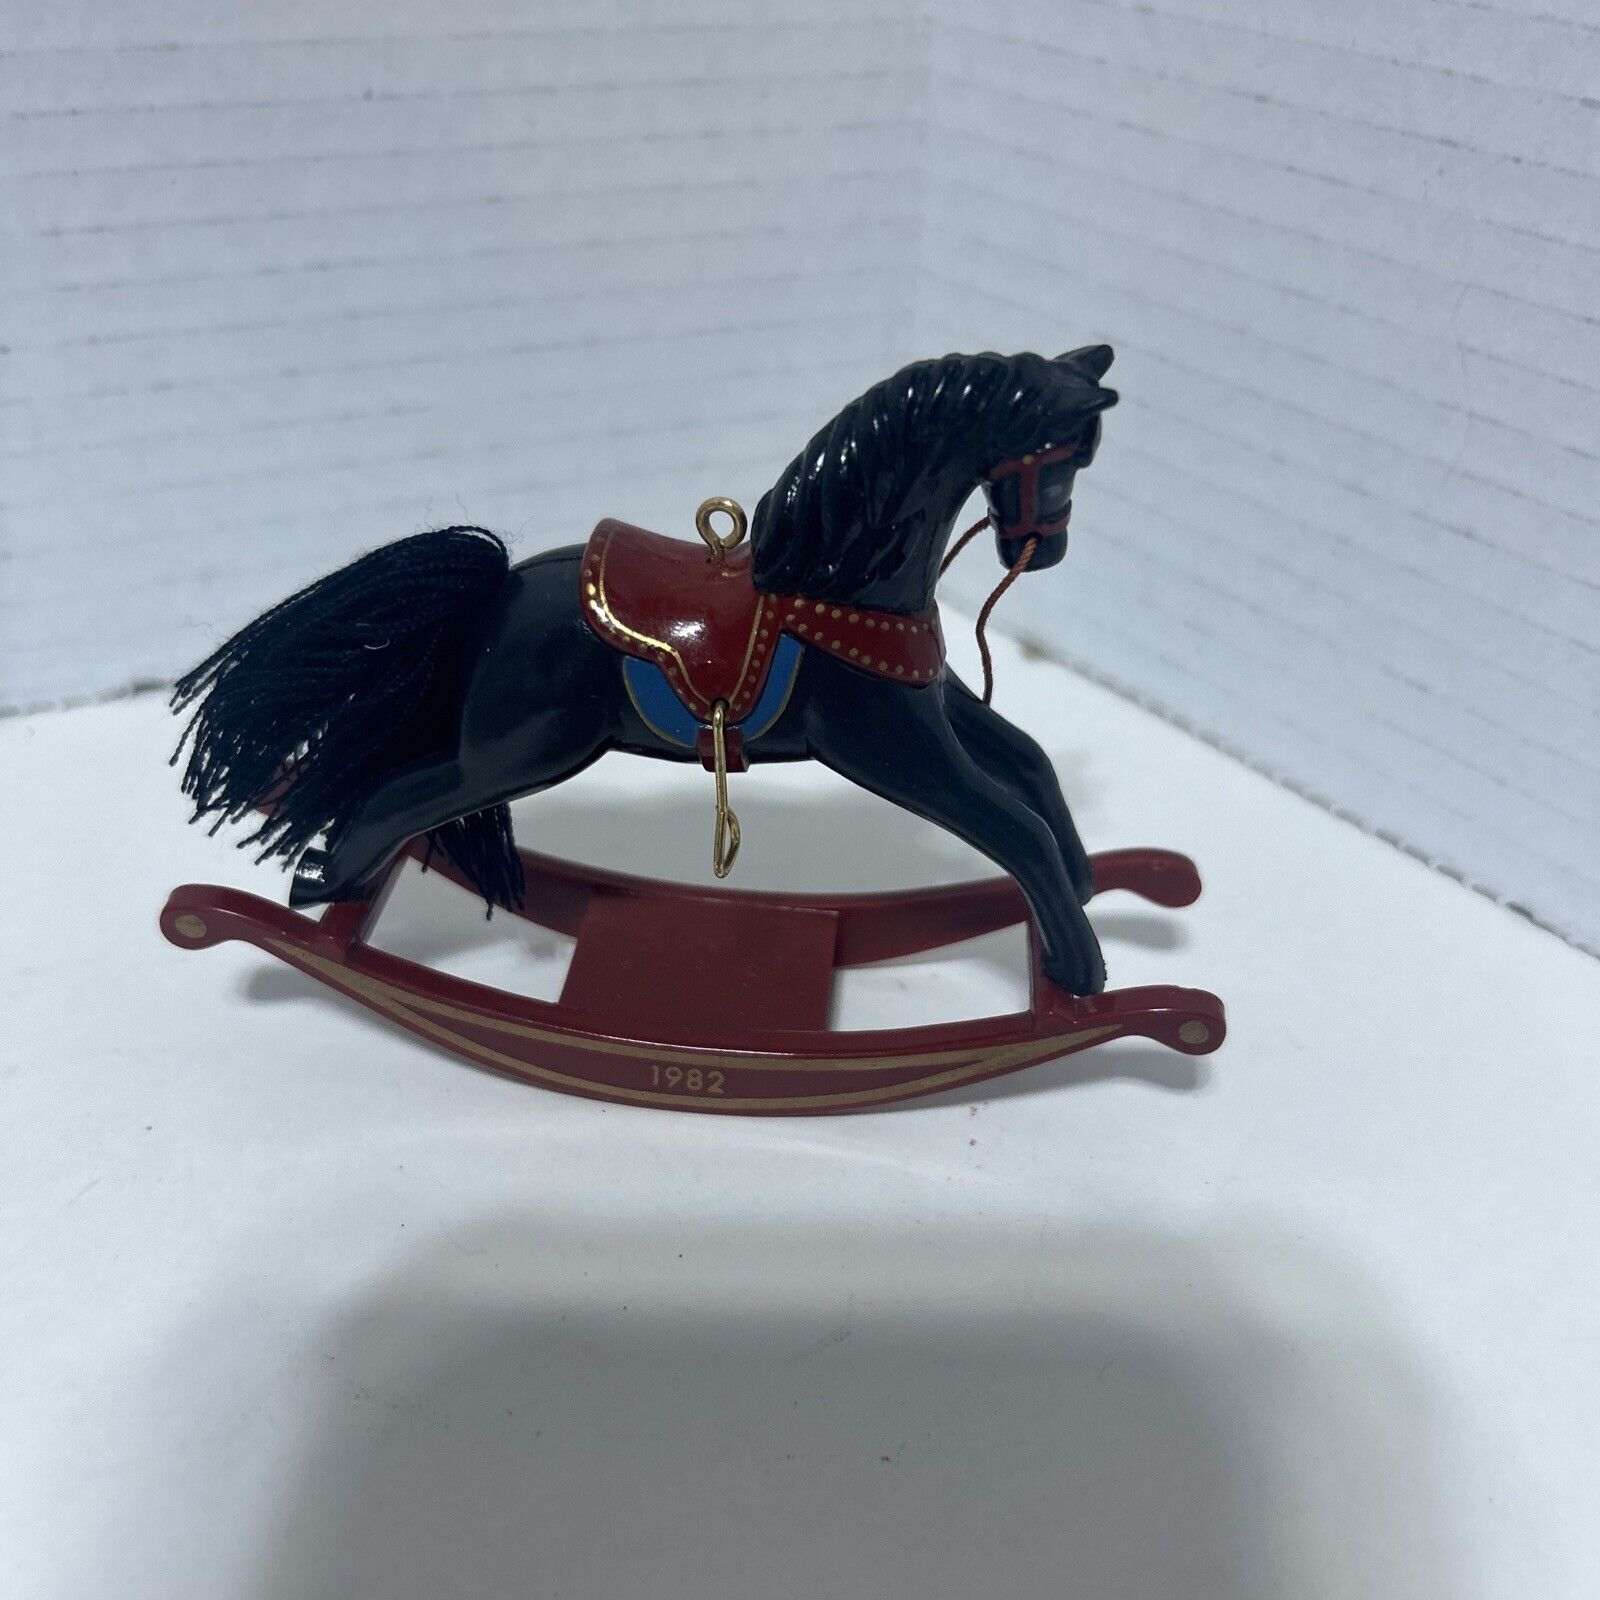 Vintage Hallmark Christmas Ornament 1982 Black Rocking Horse 2nd in series